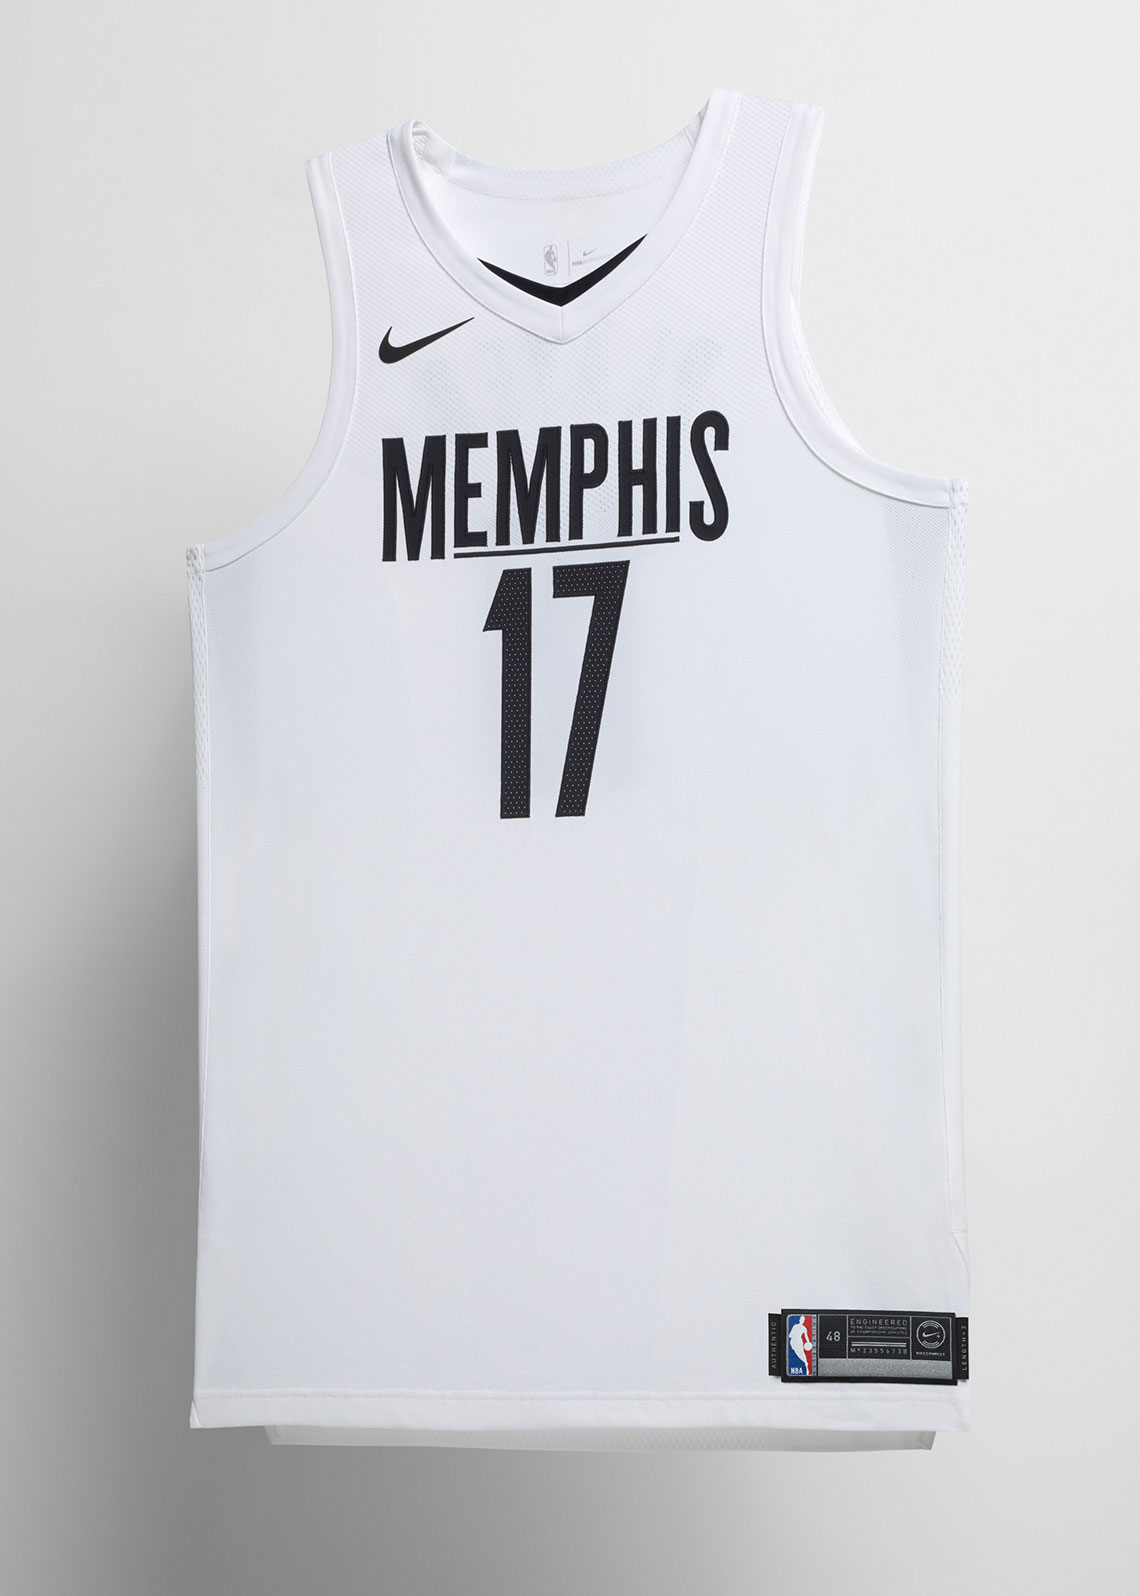 Nba City Edition Uniforms Memphis Grizzlies